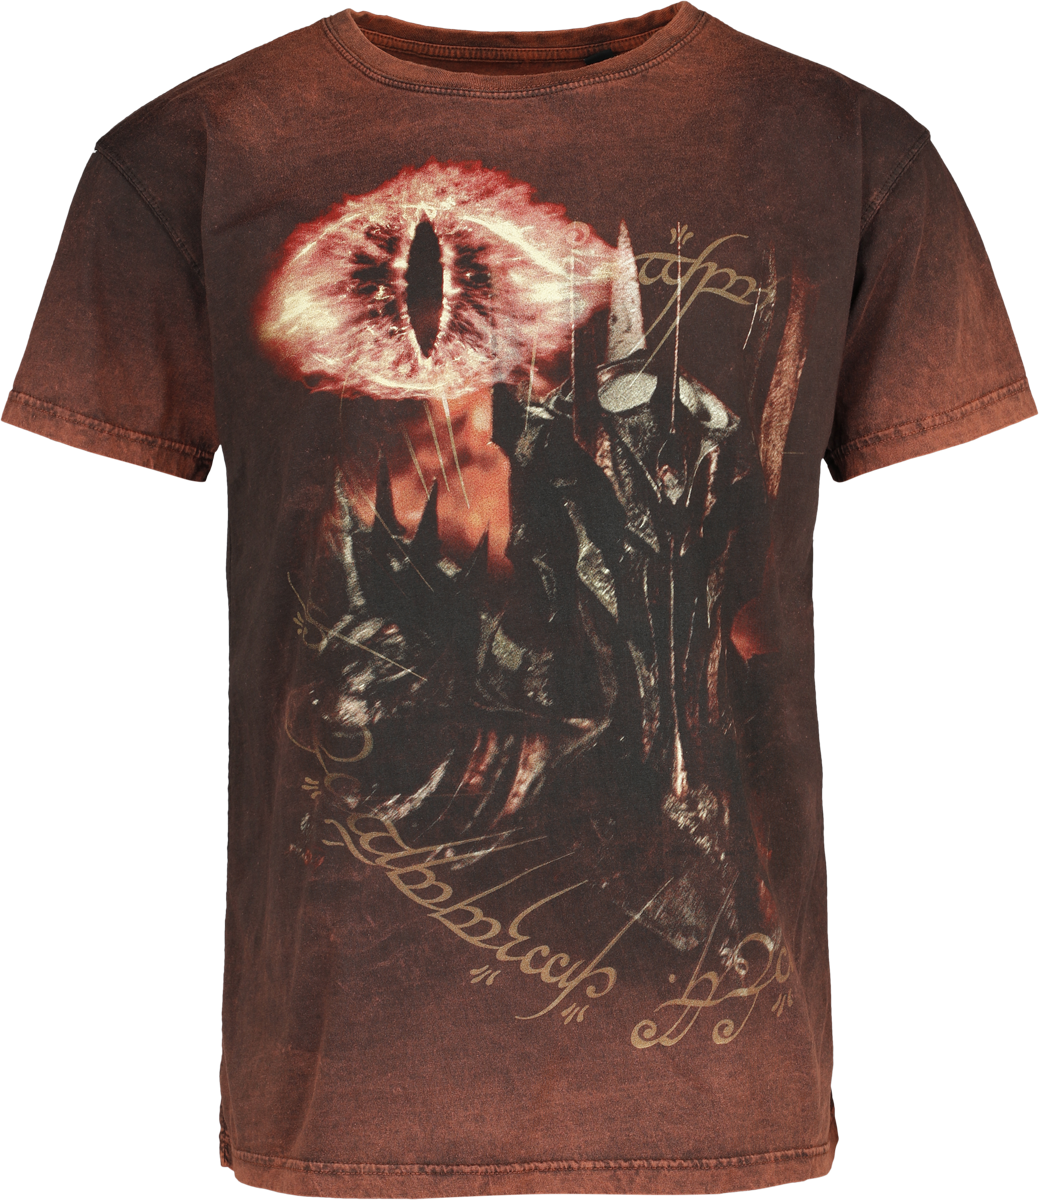 Der Herr der Ringe - Sauron - Eye Of Fire - T-Shirt - multicolor - EMP Exklusiv!